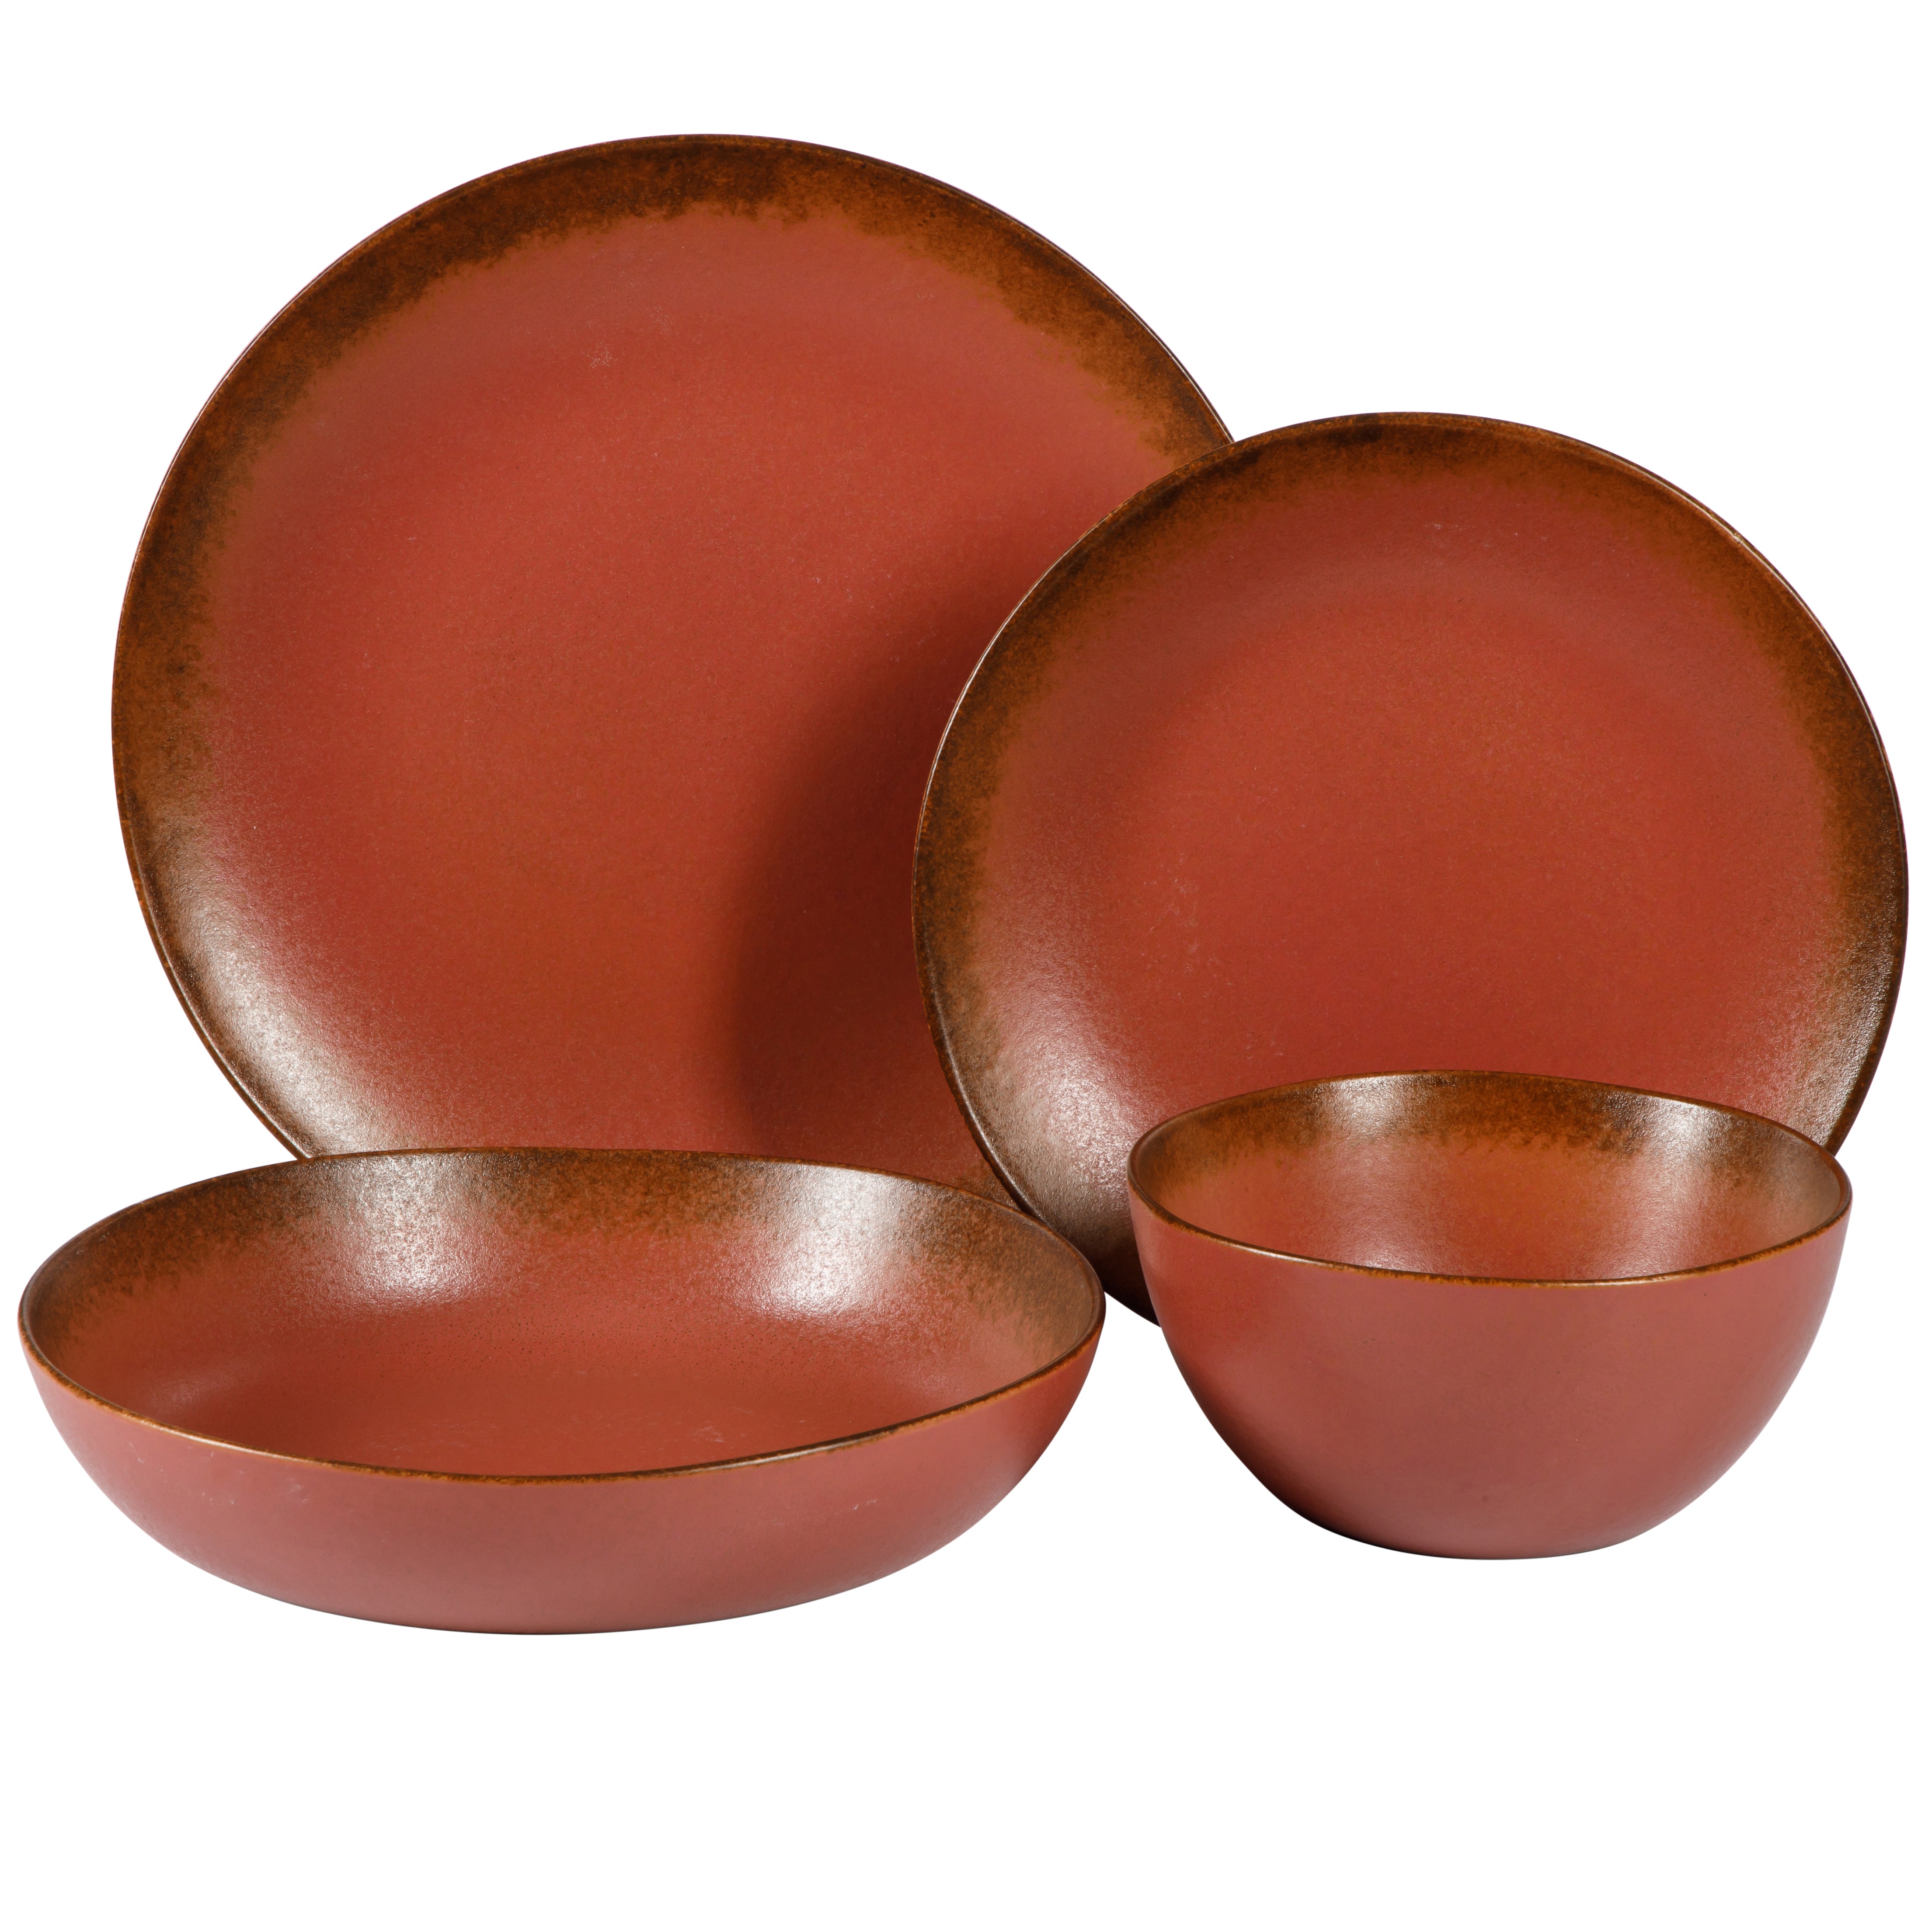 Bloomhouse Palermo Sun 16-Piece Double Bowl Stoneware Reactive Glaze Plates and Bowls Dinnerware Set